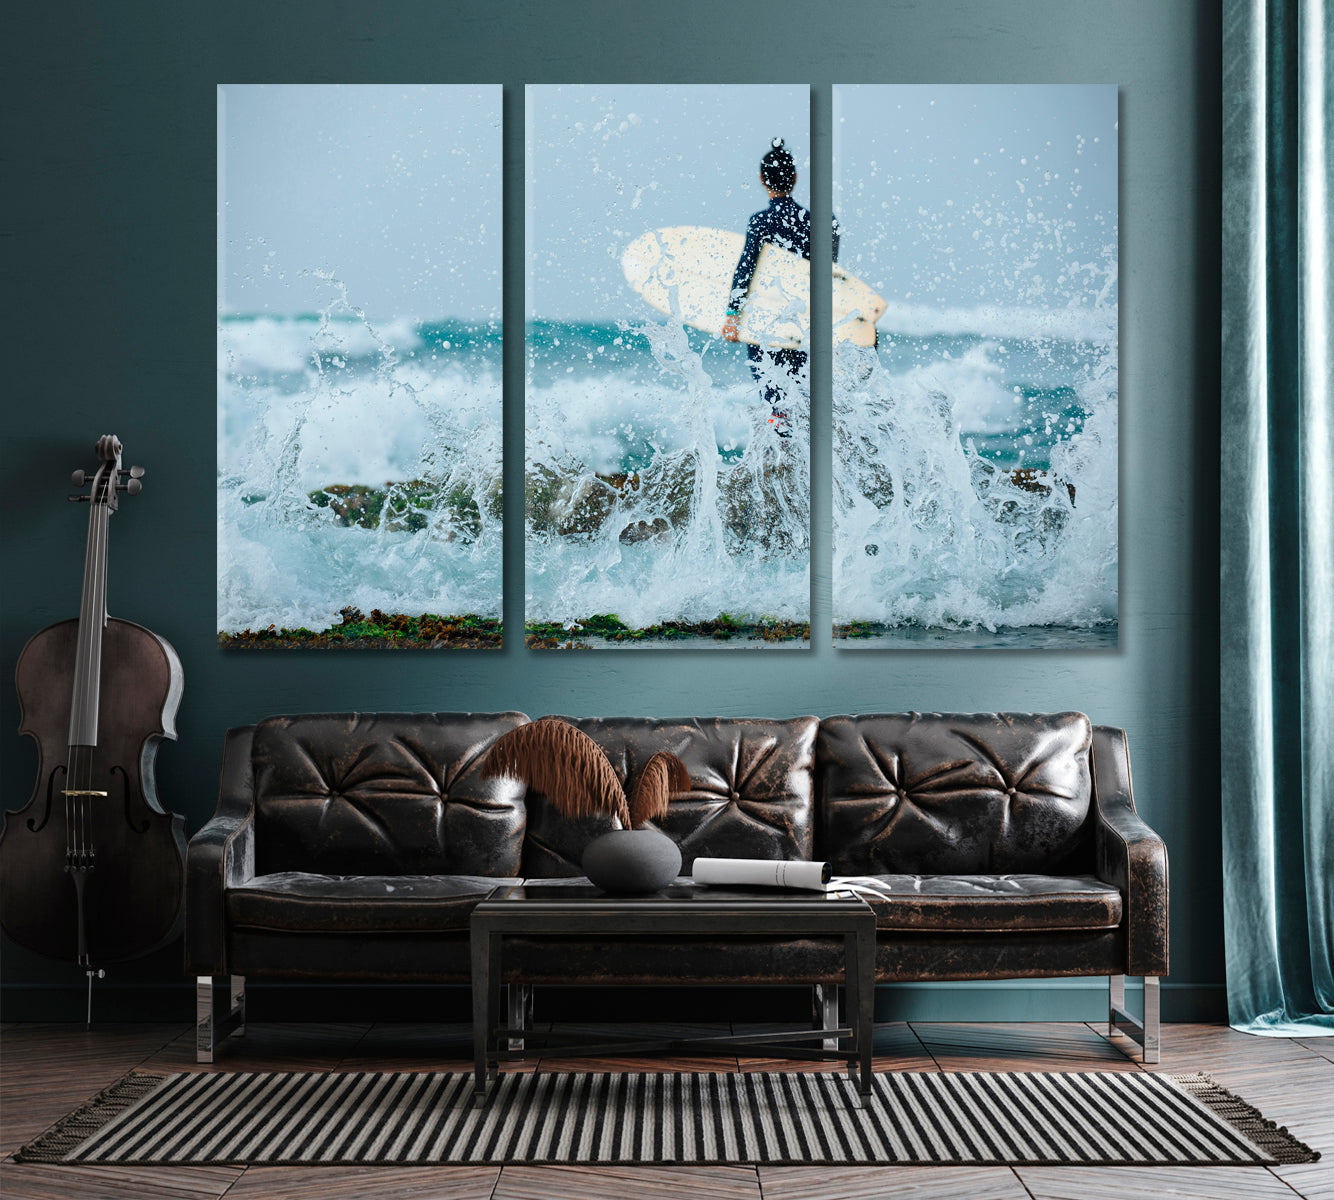 BIG WAVES Surf Wild Ocean Surfer Surfboard Motivation Sport Poster Print Decor Artesty   